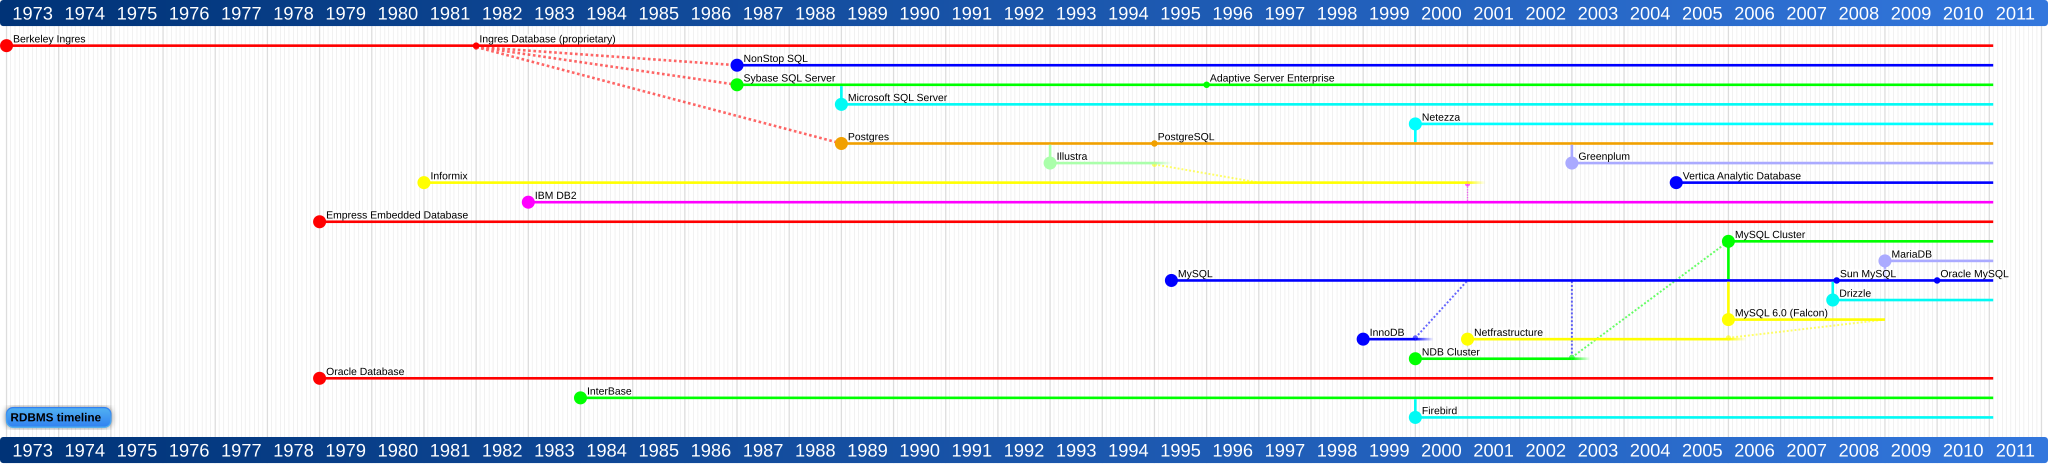 Timeline of the development of major RDBMS software.